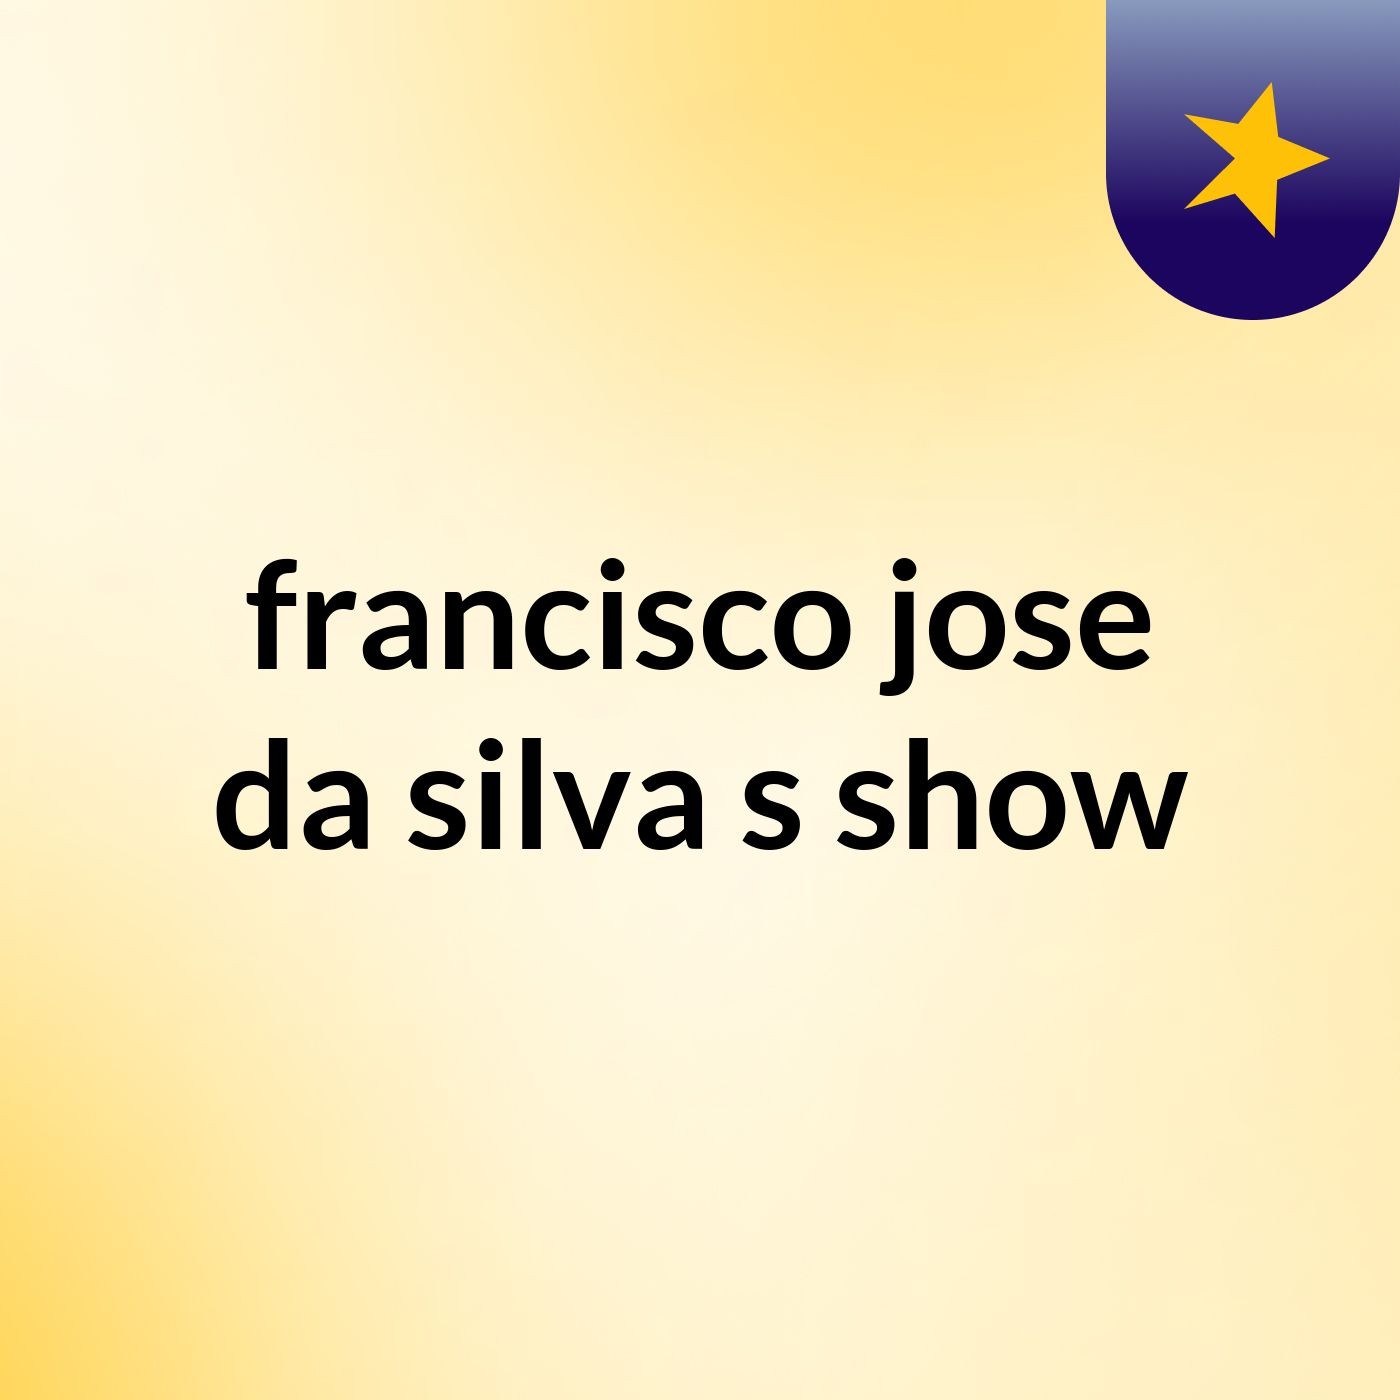 francisco jose da silva's show